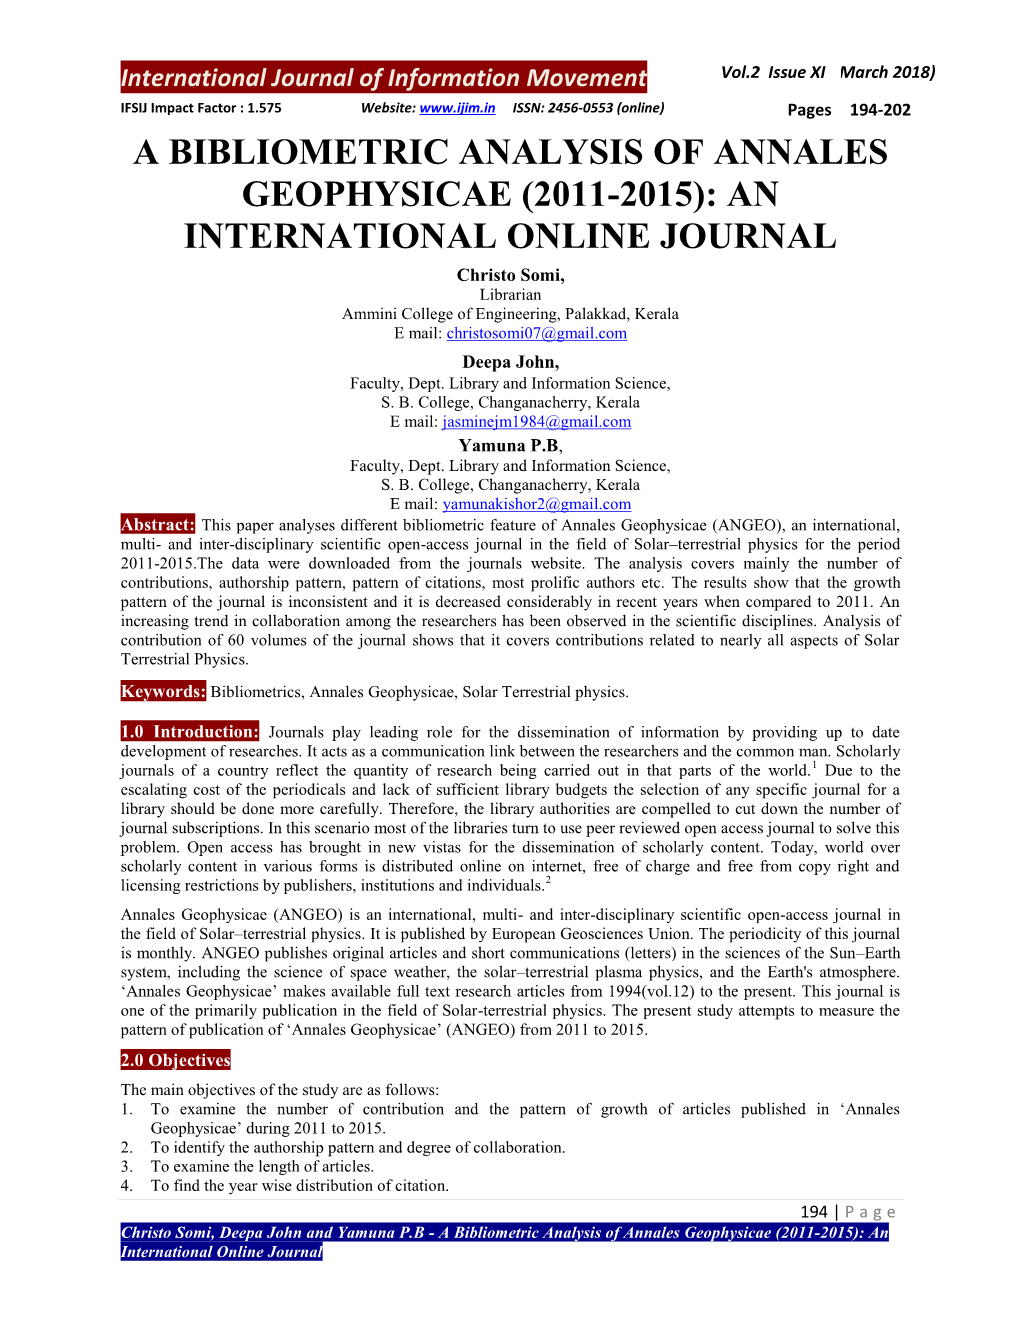 A Bibliometric Analysis of Annales Geophysicae (2011-2015): an International Online Journal